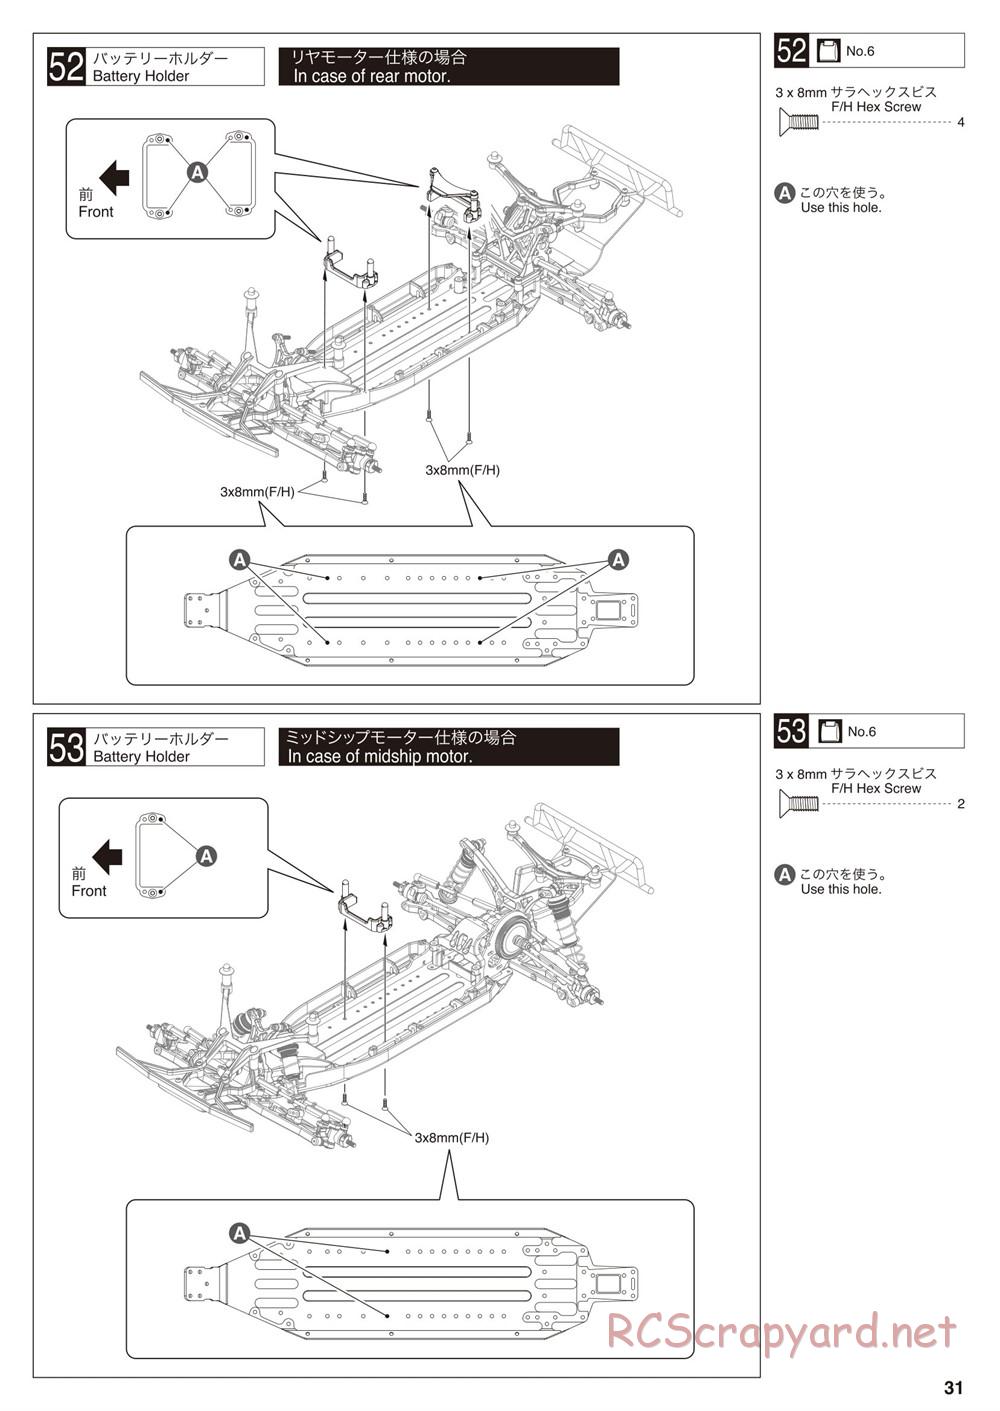 Kyosho - Ultima SC6 - Manual - Page 31